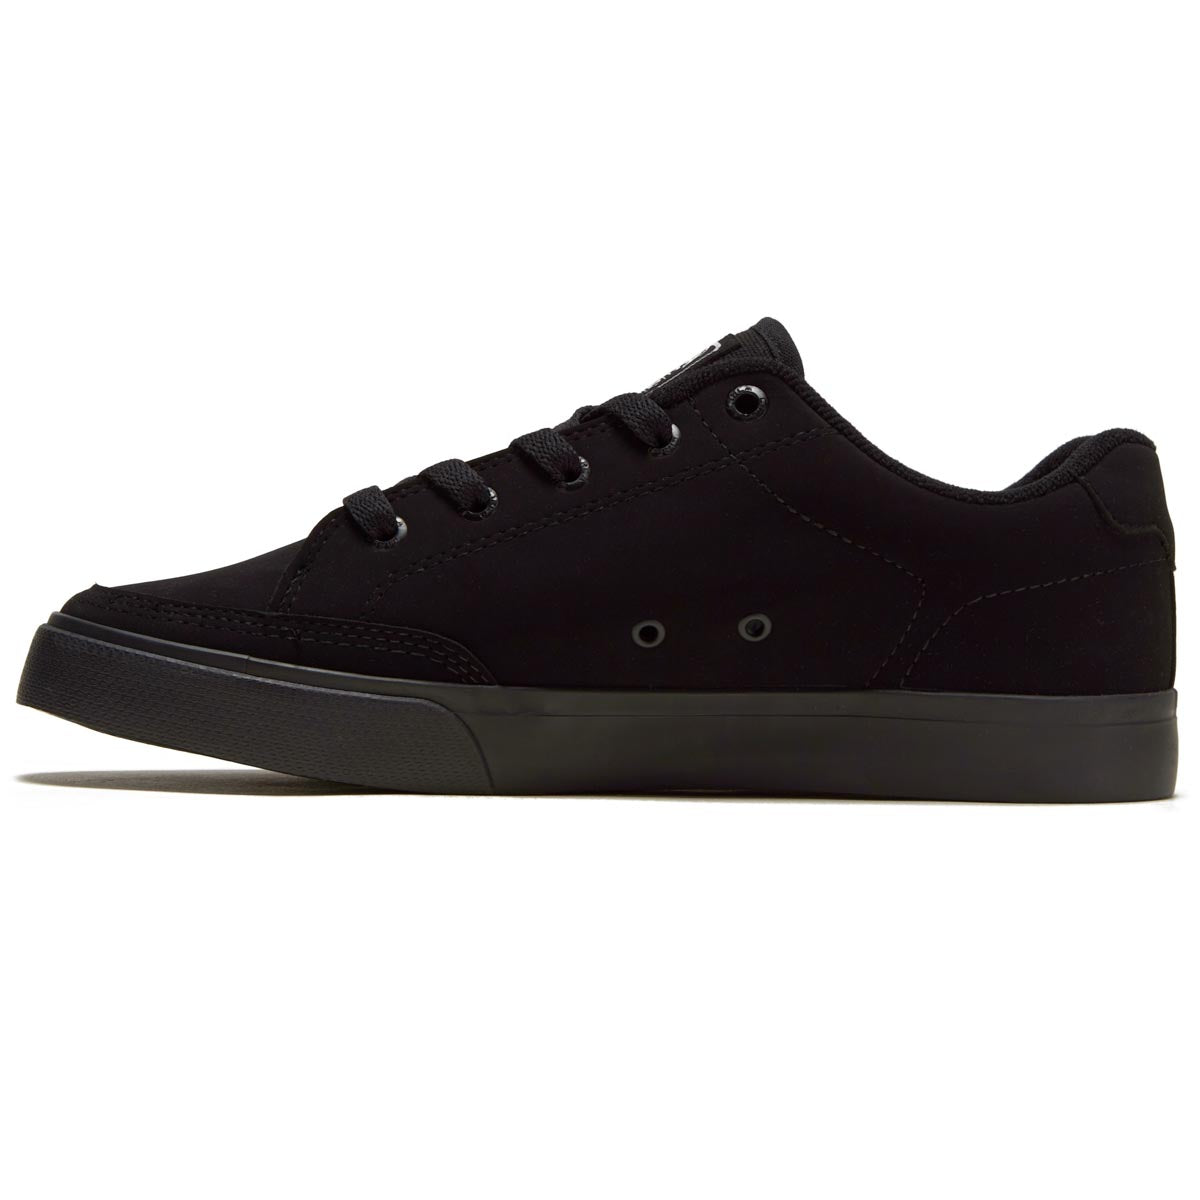 C1rca AL 50 Slim Shoes - Black/Black image 2